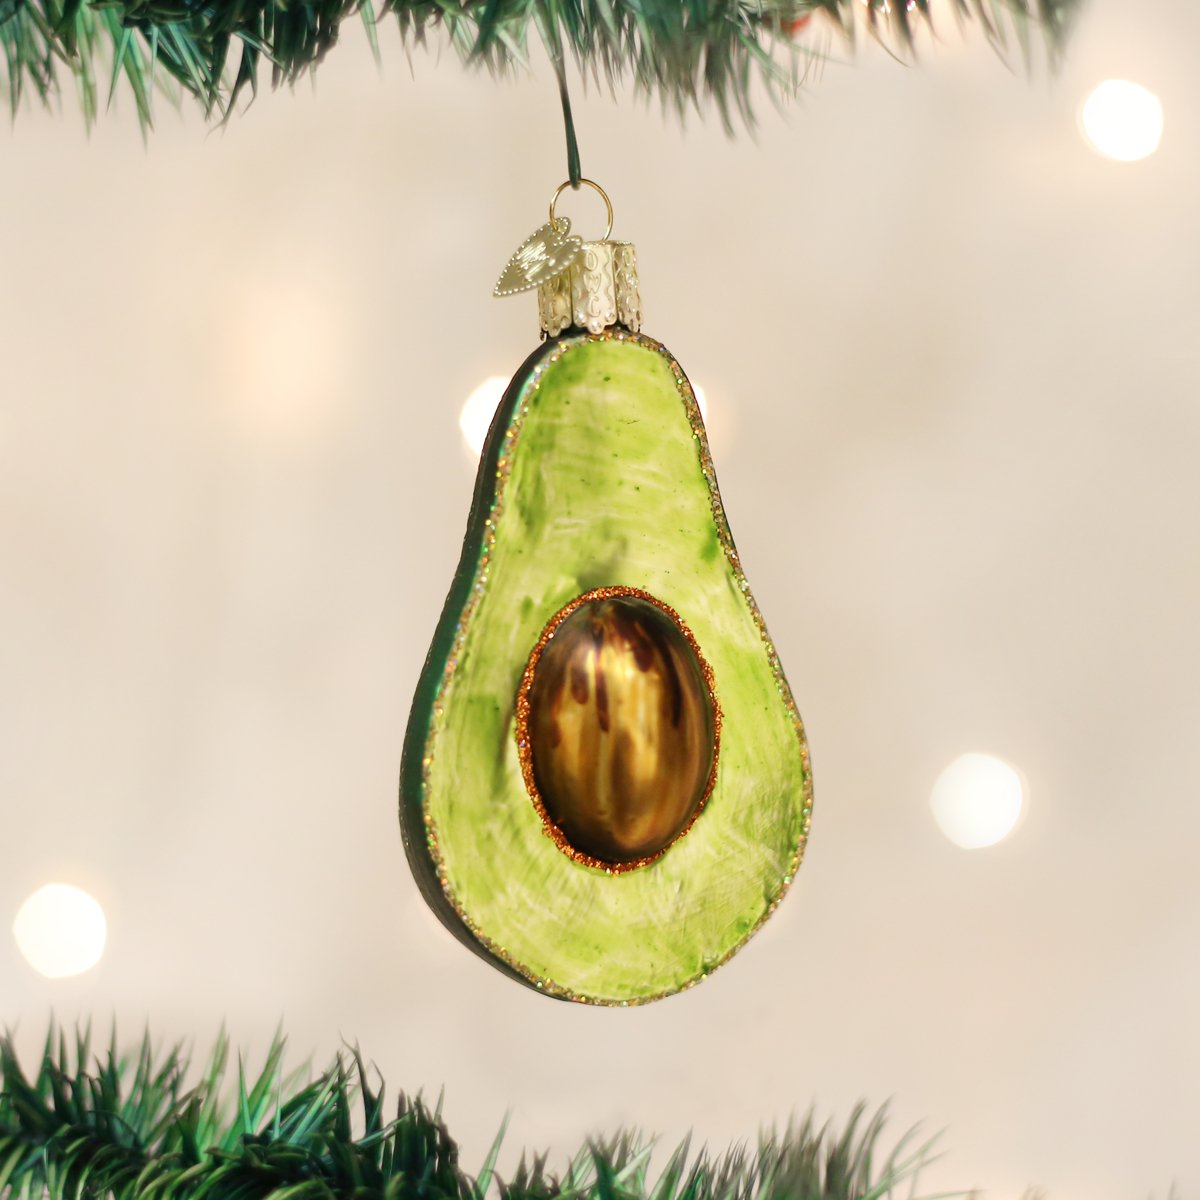 Old World Christmas - Avocado Ornament    